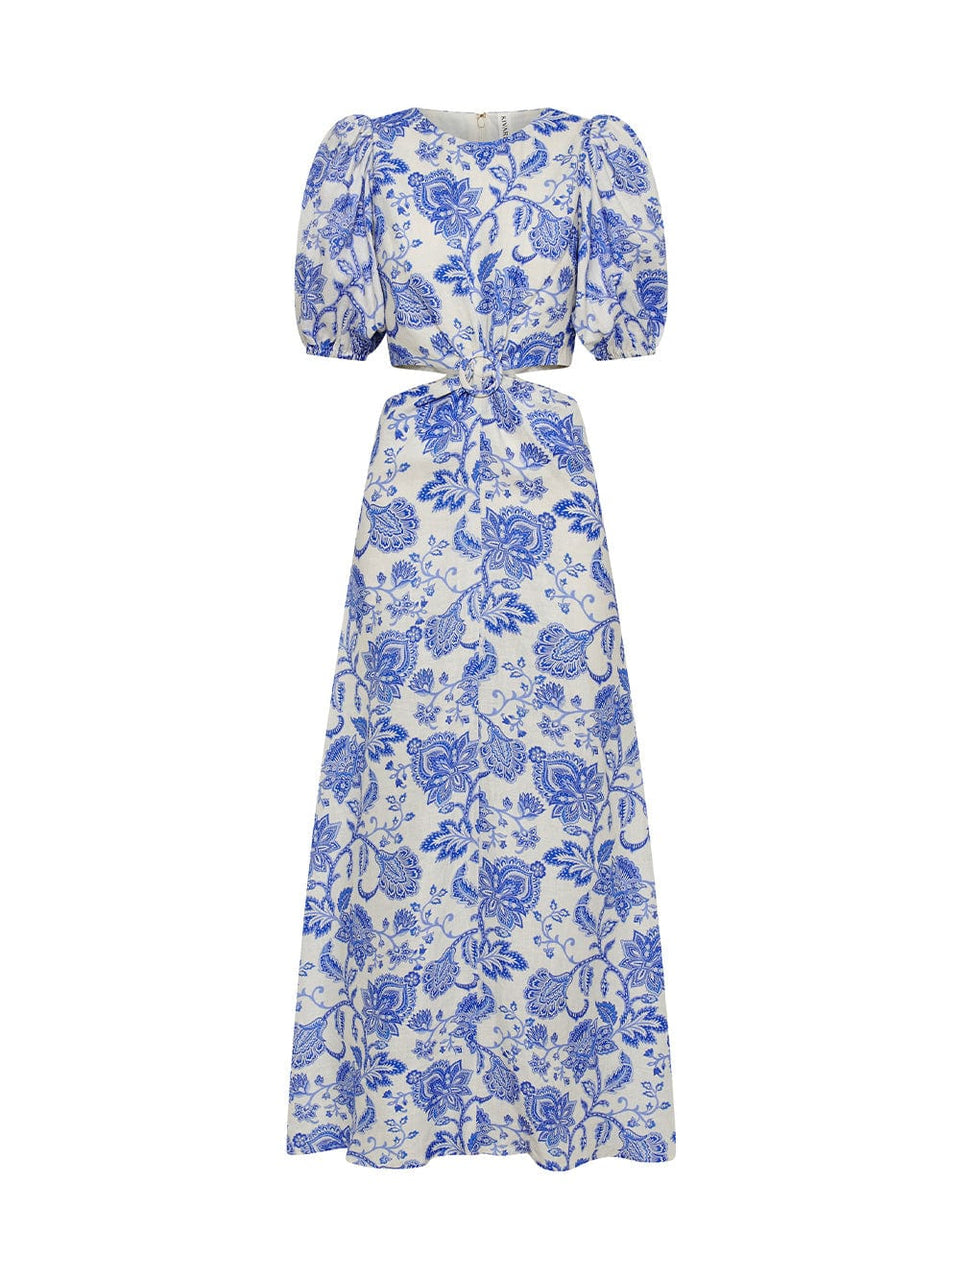 Athena Maxi Dress KIVARI | Blue and white paisley maxi dress